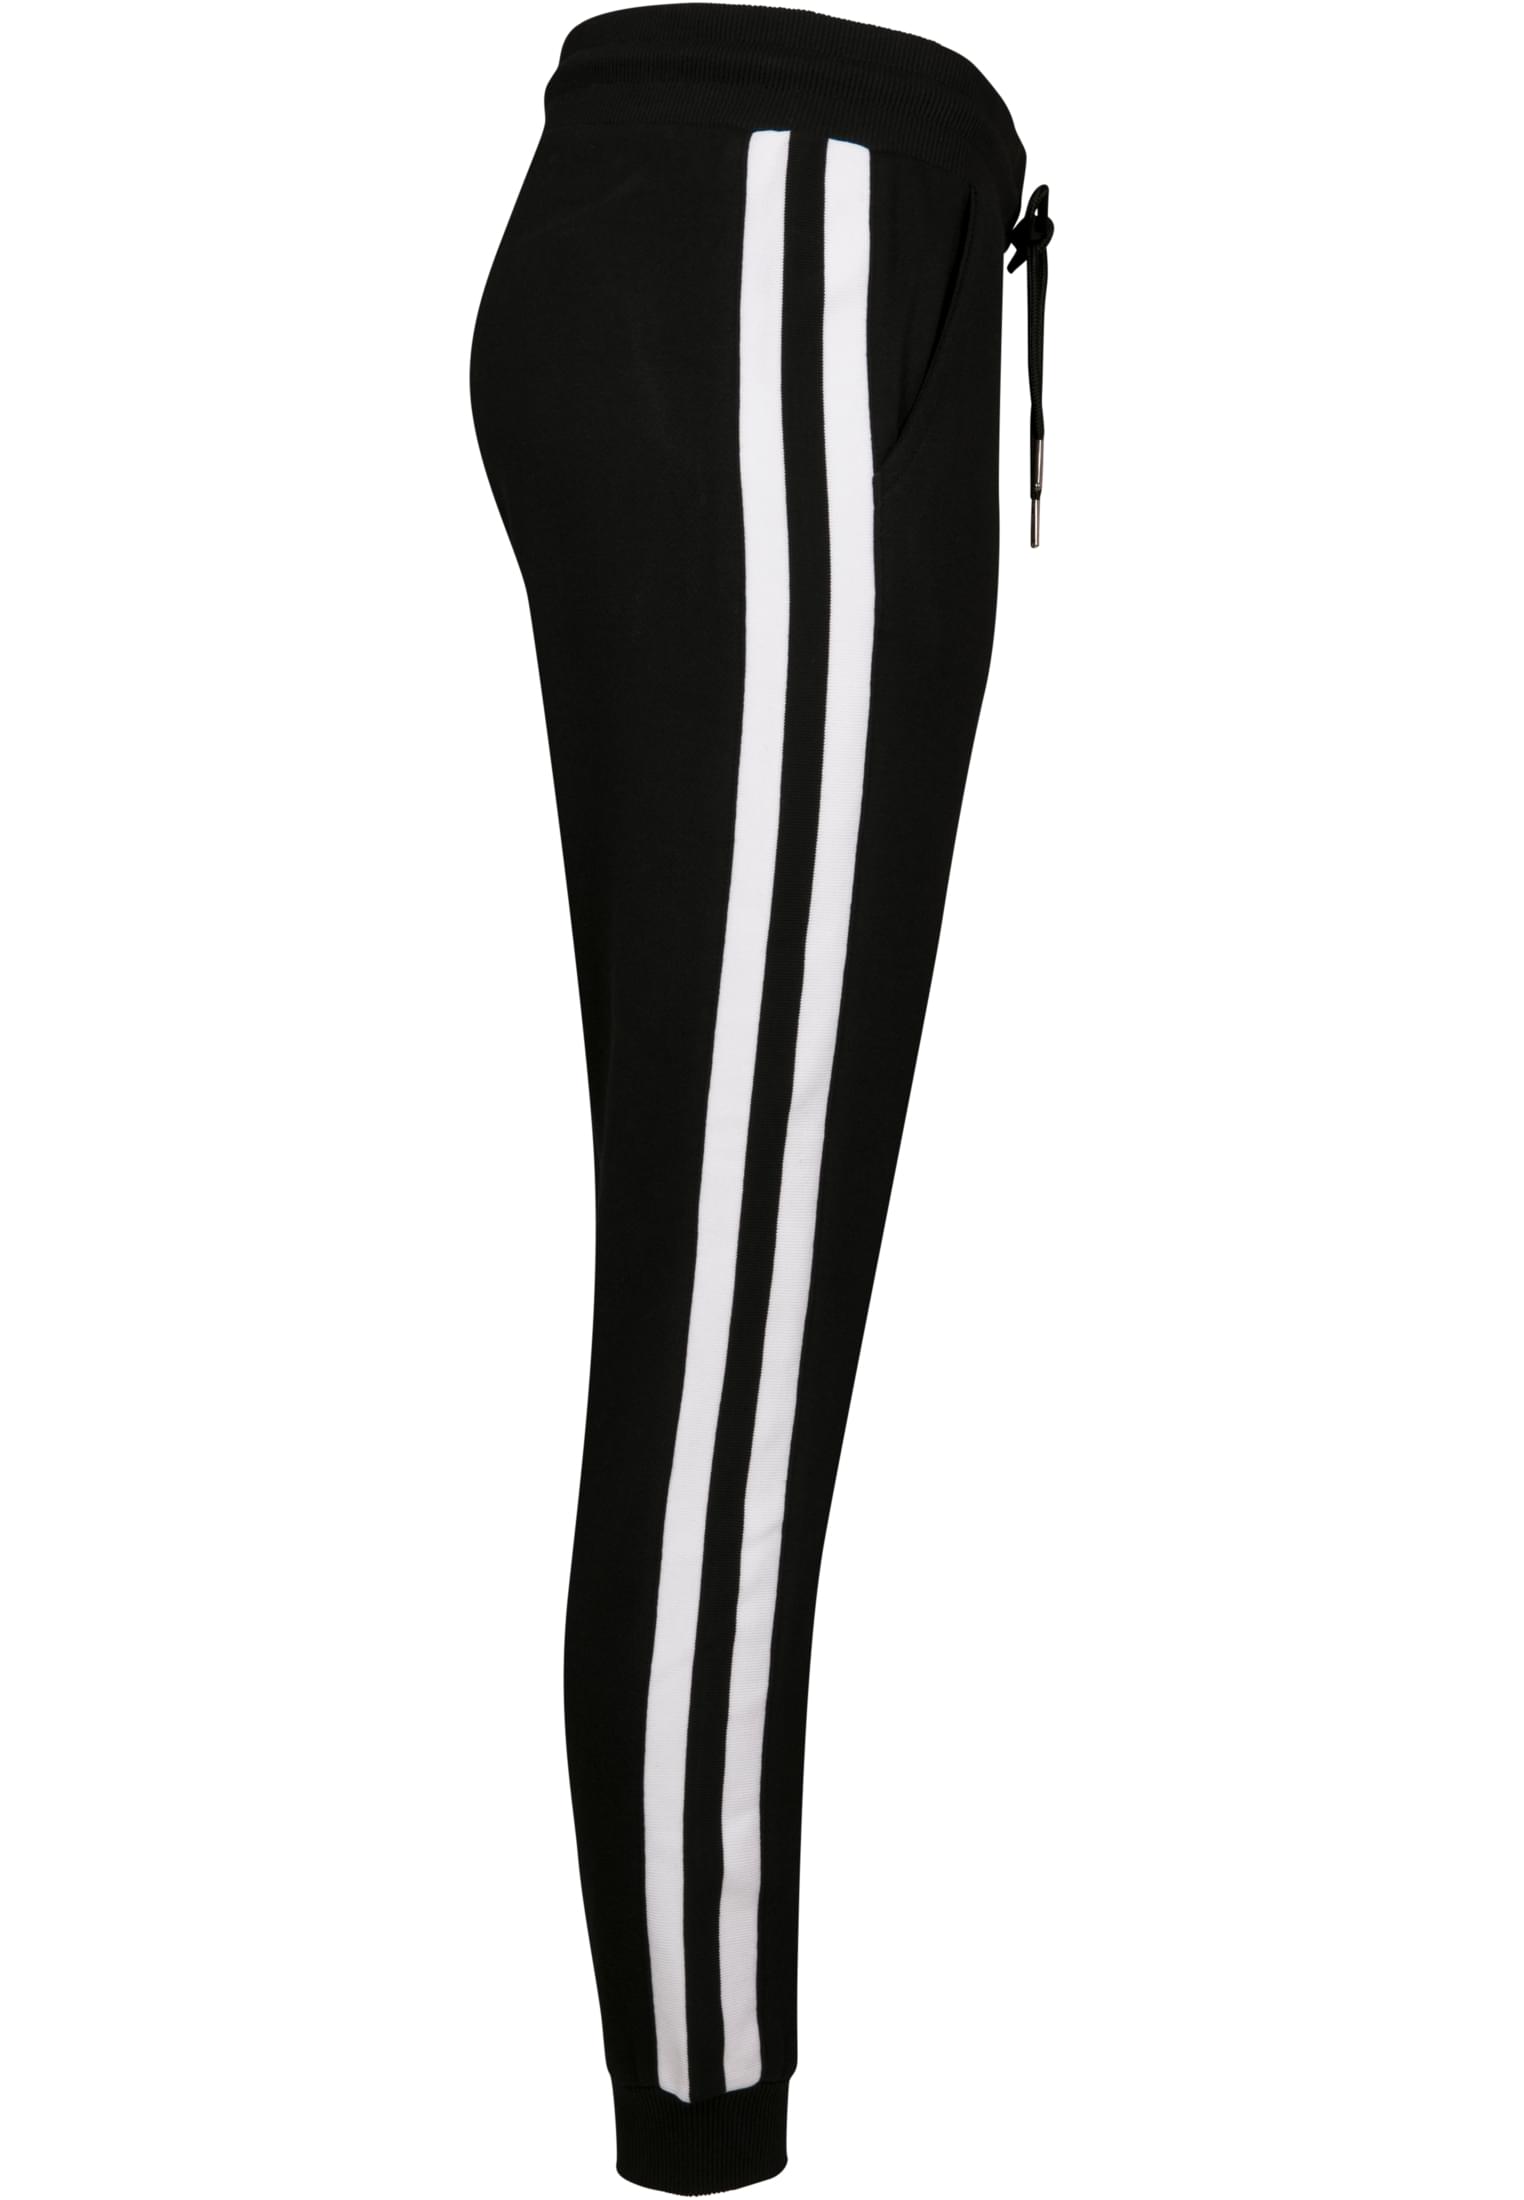 Damen Ladies College Contrast Sweatpants in Farbe black/white/black